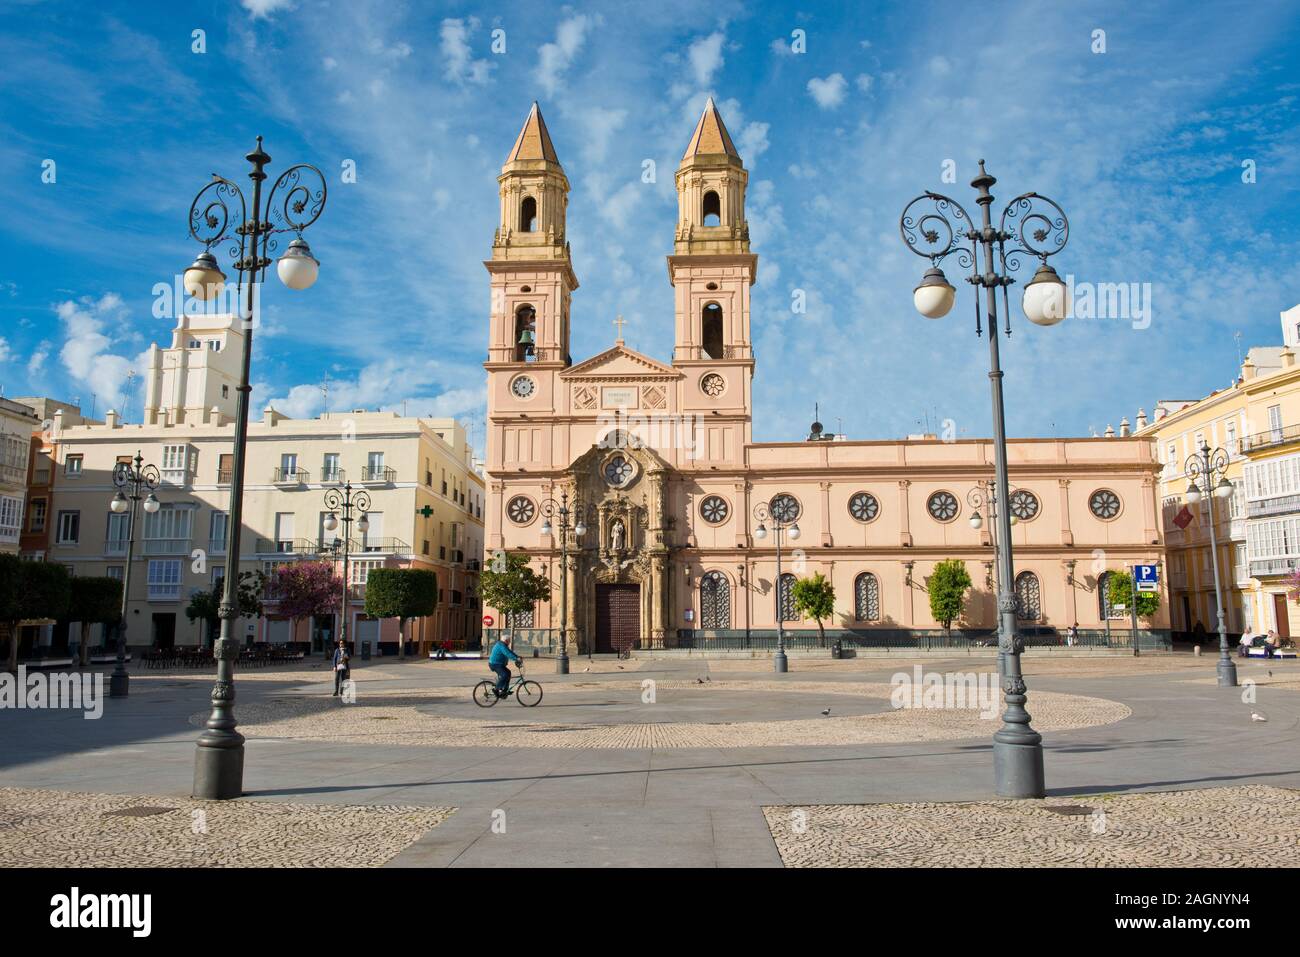 Man riding bicycle in square and Parish church of San Antonio of Padua. Cadiz, Andalusia. Southern Spain Stock Photo